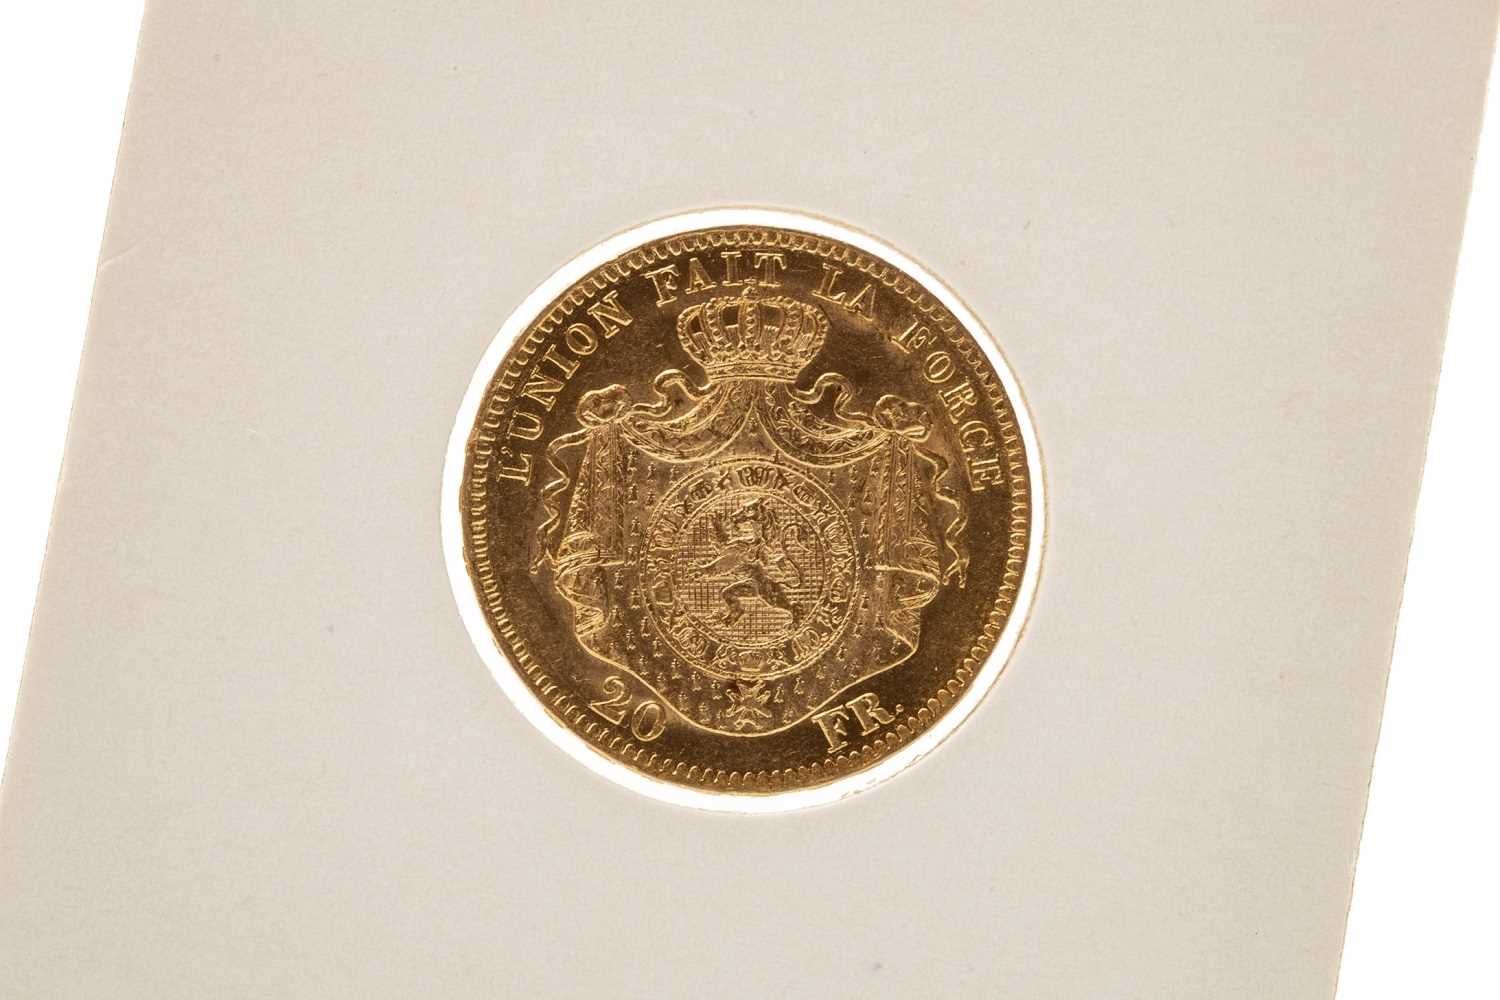 Lot 585 - A GOLD BELGIAN 20 FRANC COIN, 1869